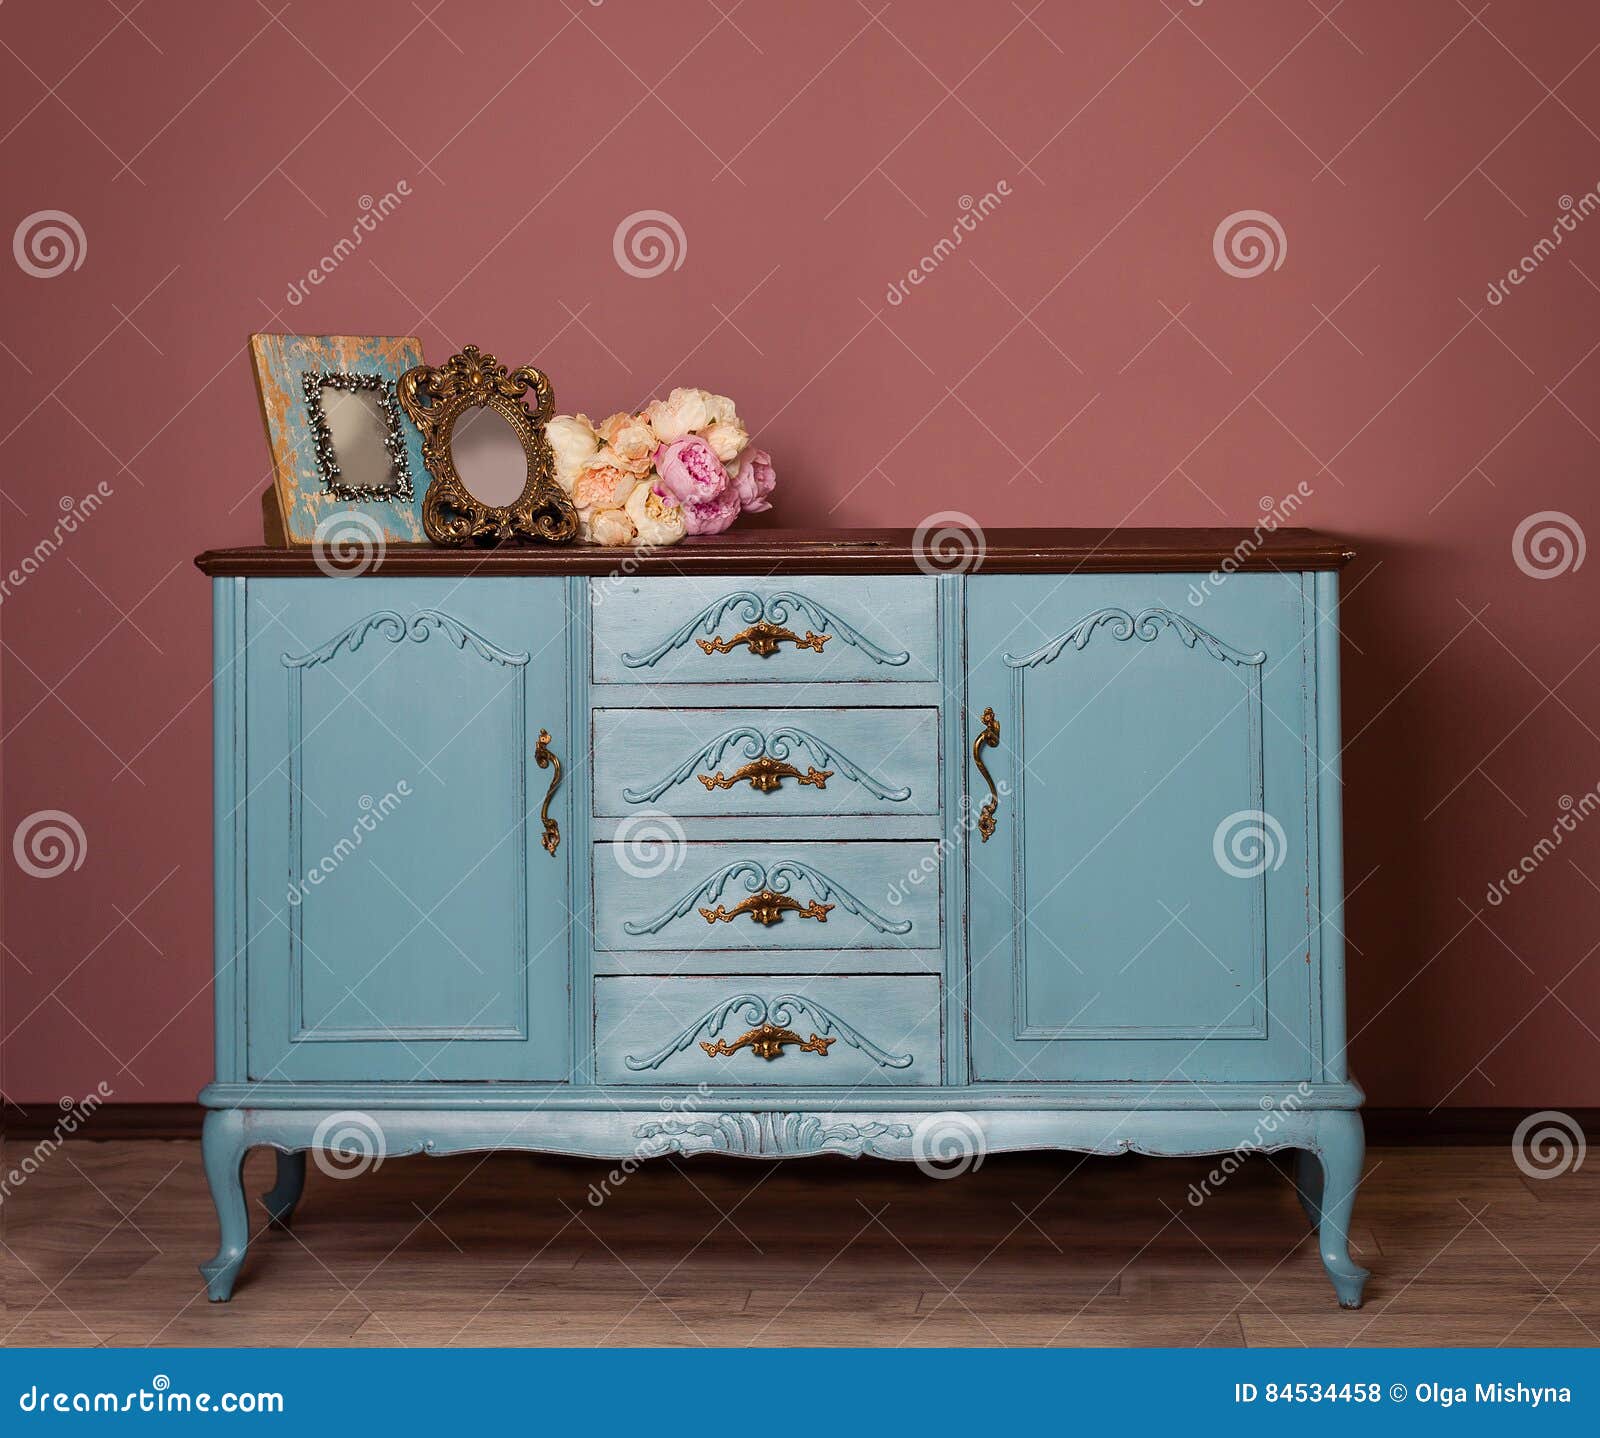 Vintage Blue Wooden Dresser Tender Bouquet And Two Frames Stock